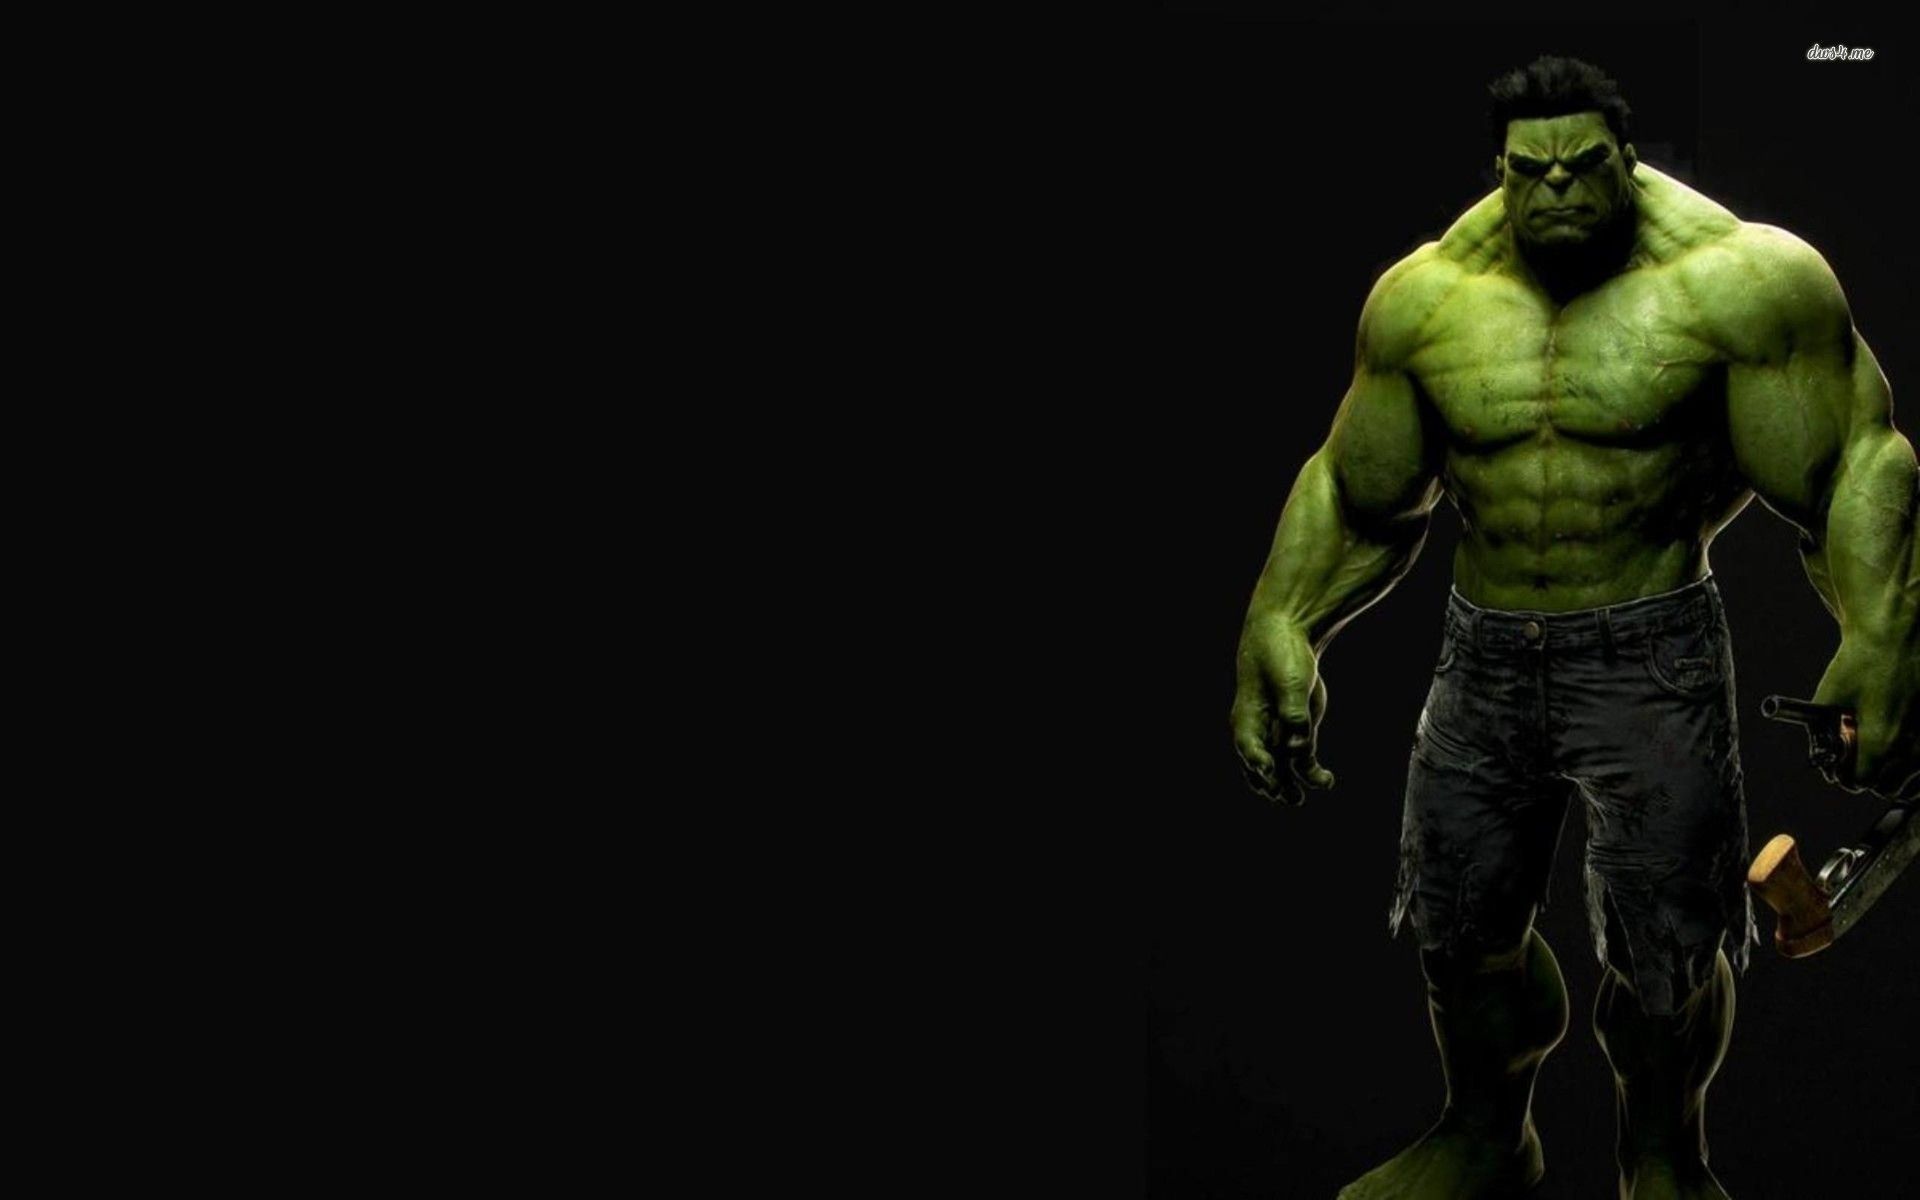 Hulk Desktop Wallpaper. Hulk wallpaper, Superhero wallpaper, The hulk wallpaper